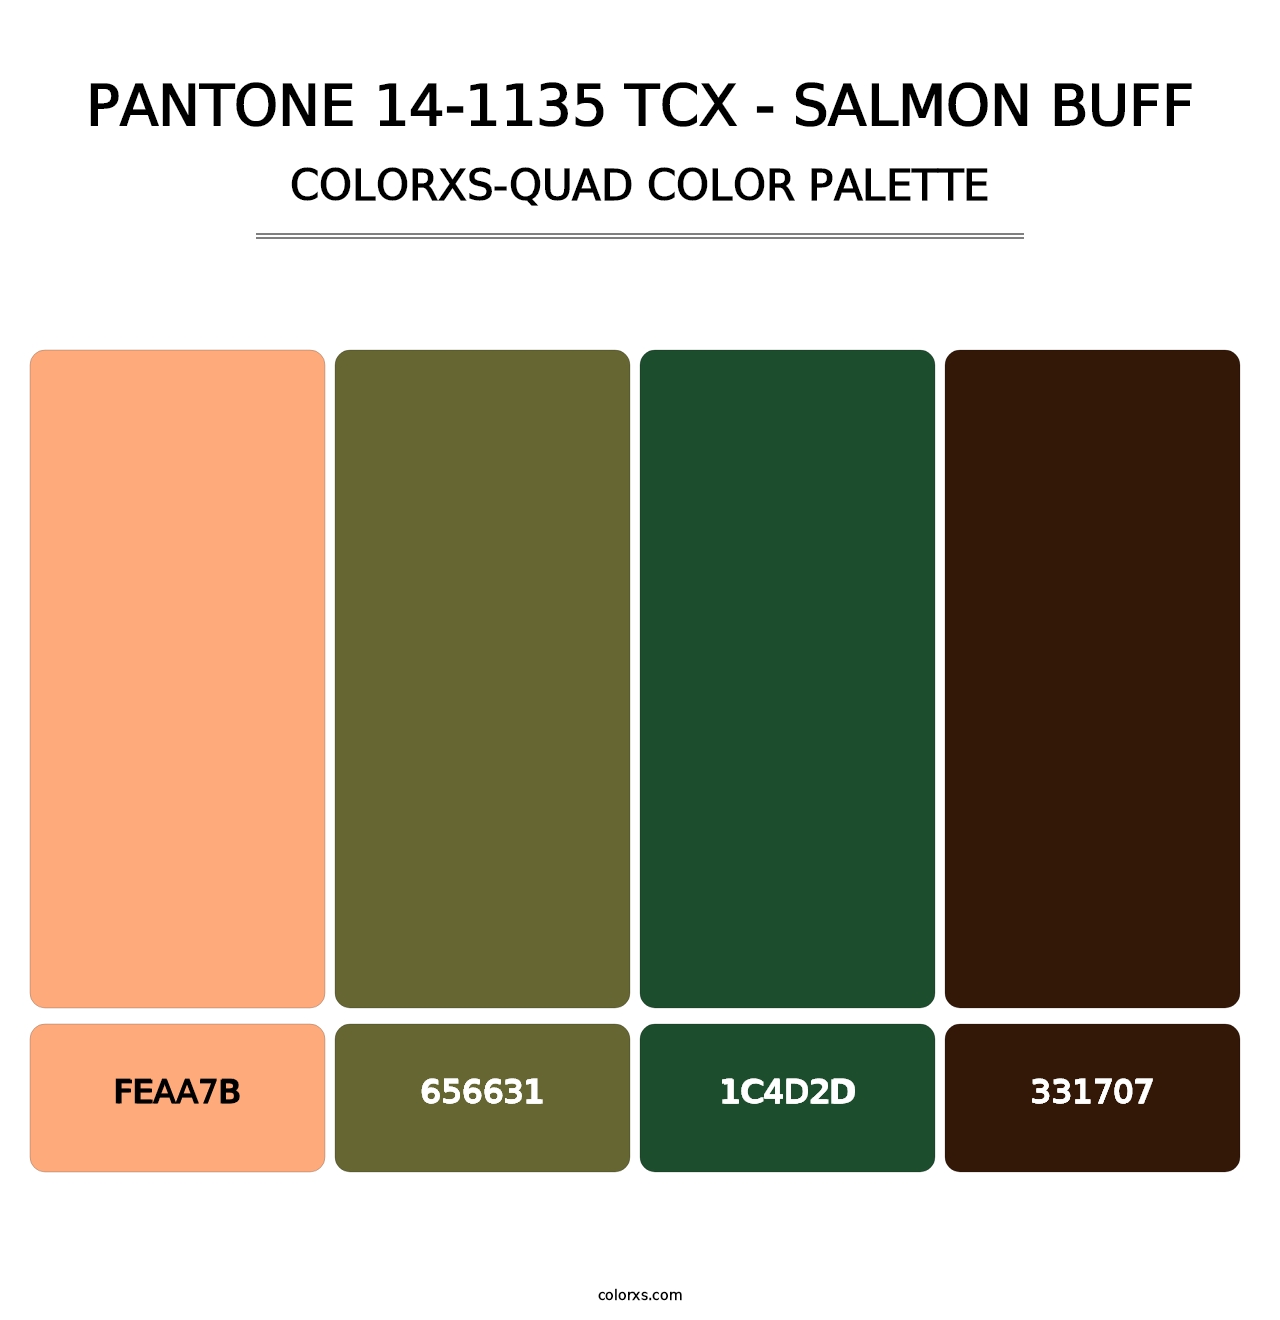 PANTONE 14-1135 TCX - Salmon Buff - Colorxs Quad Palette